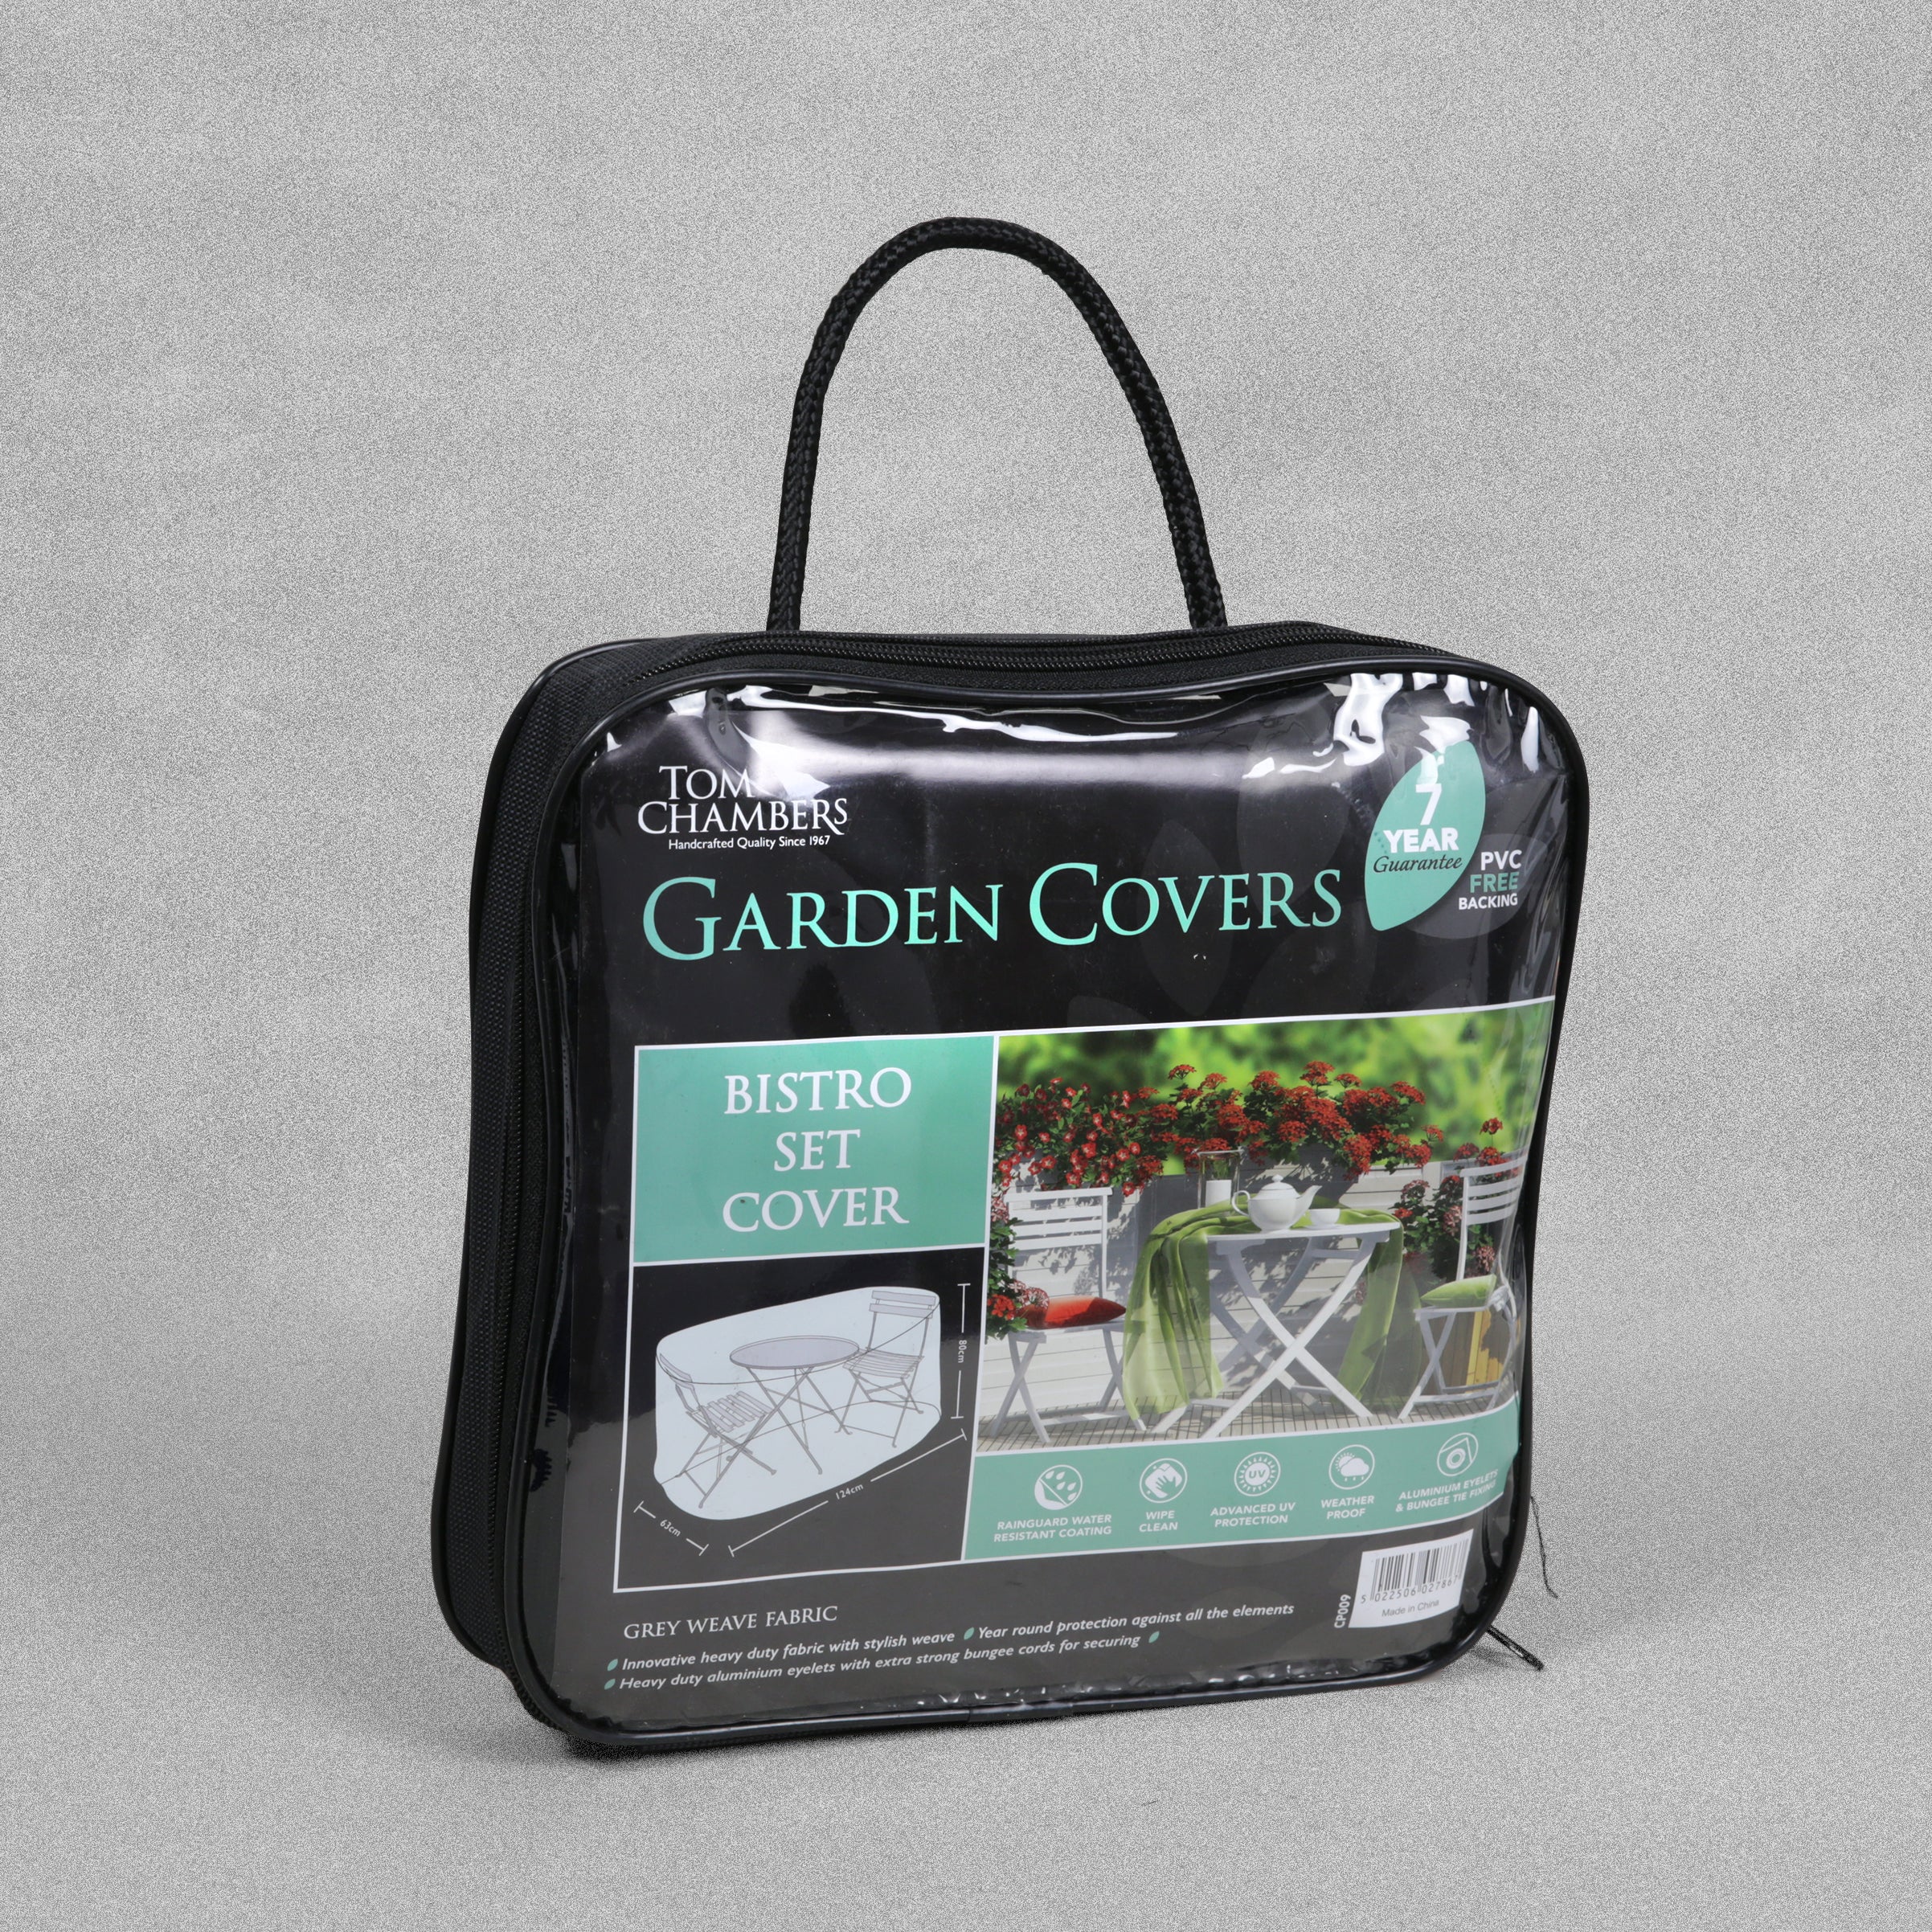 Tom Chambers Prestige Range Garden Covers - Bistro Set Cover - Grey